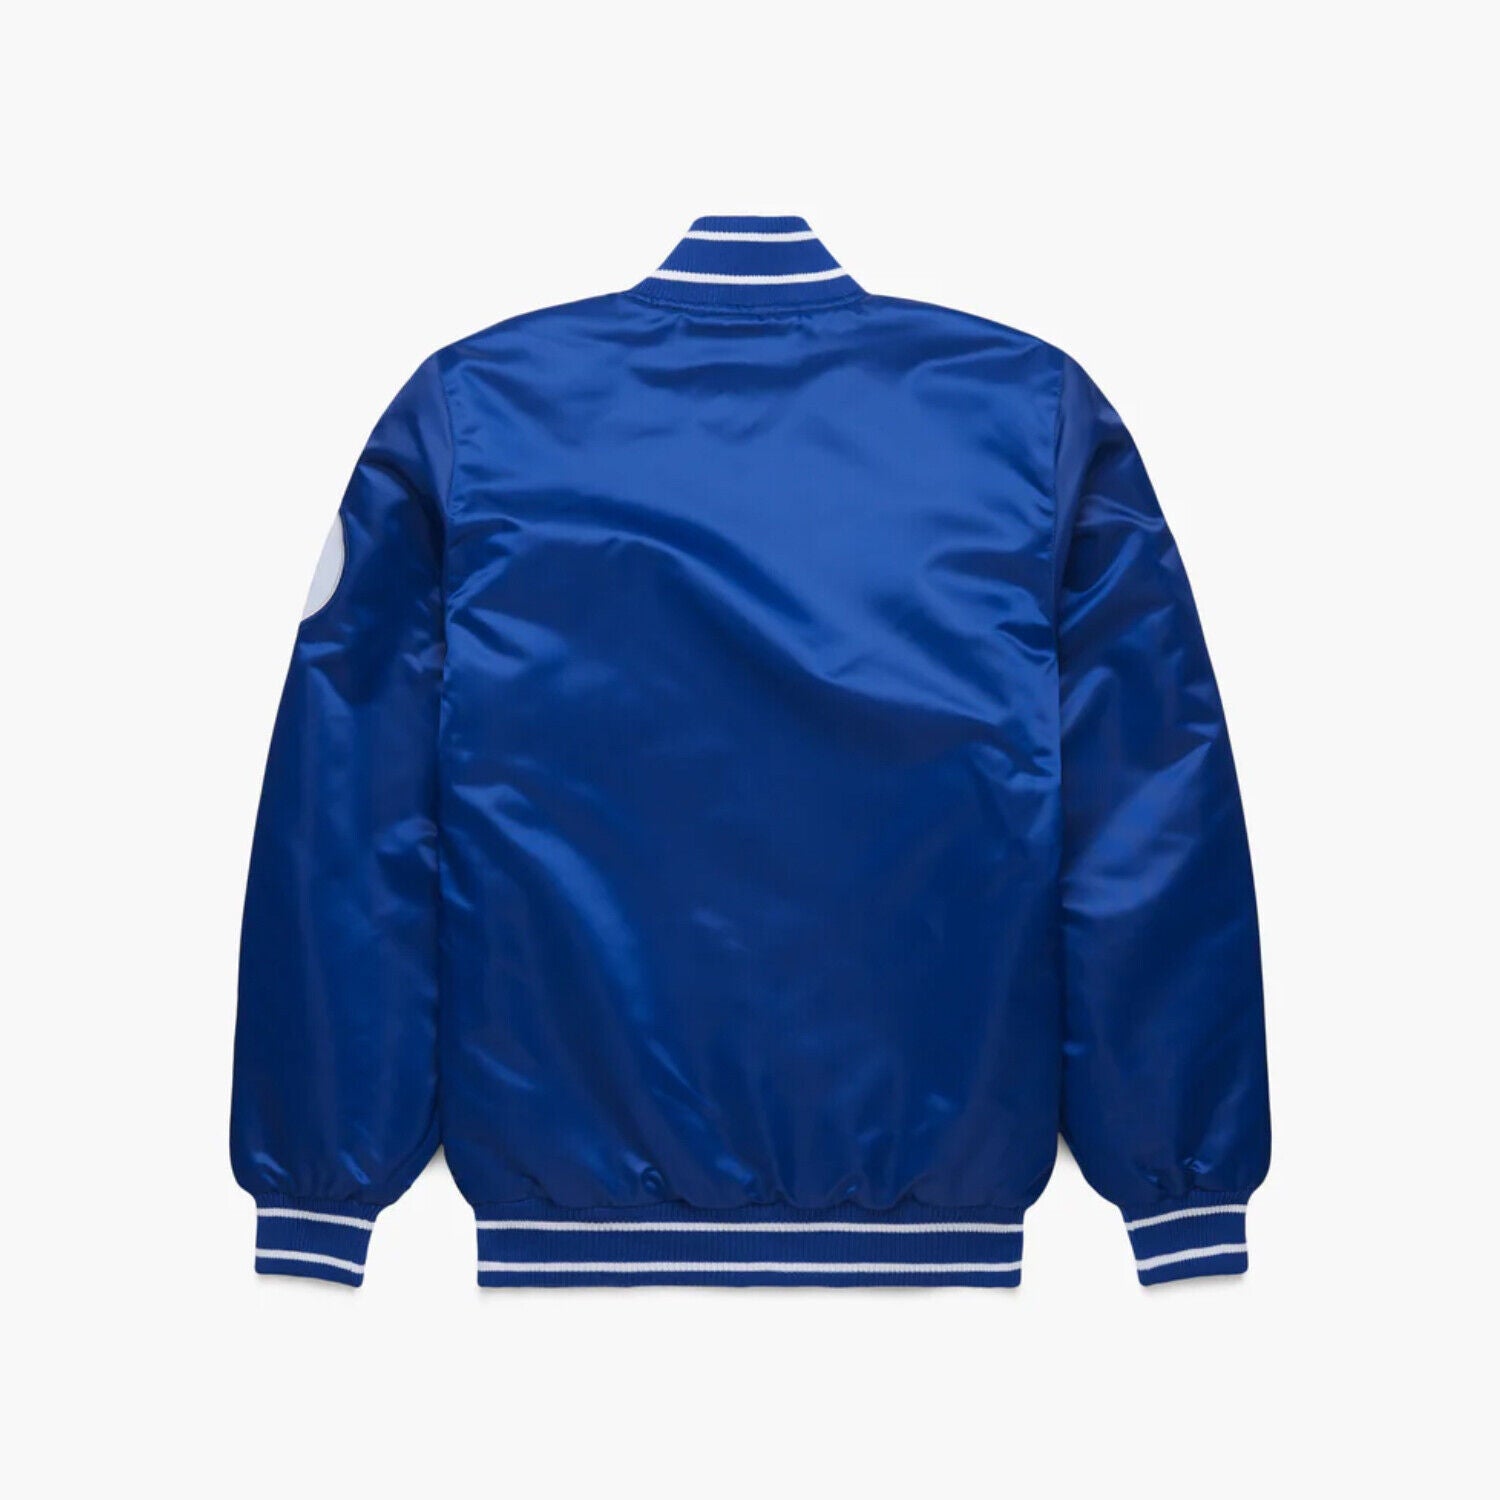 Royal Blue Satin Royals Baseball Bomber Style Letterman Varsity Jacket